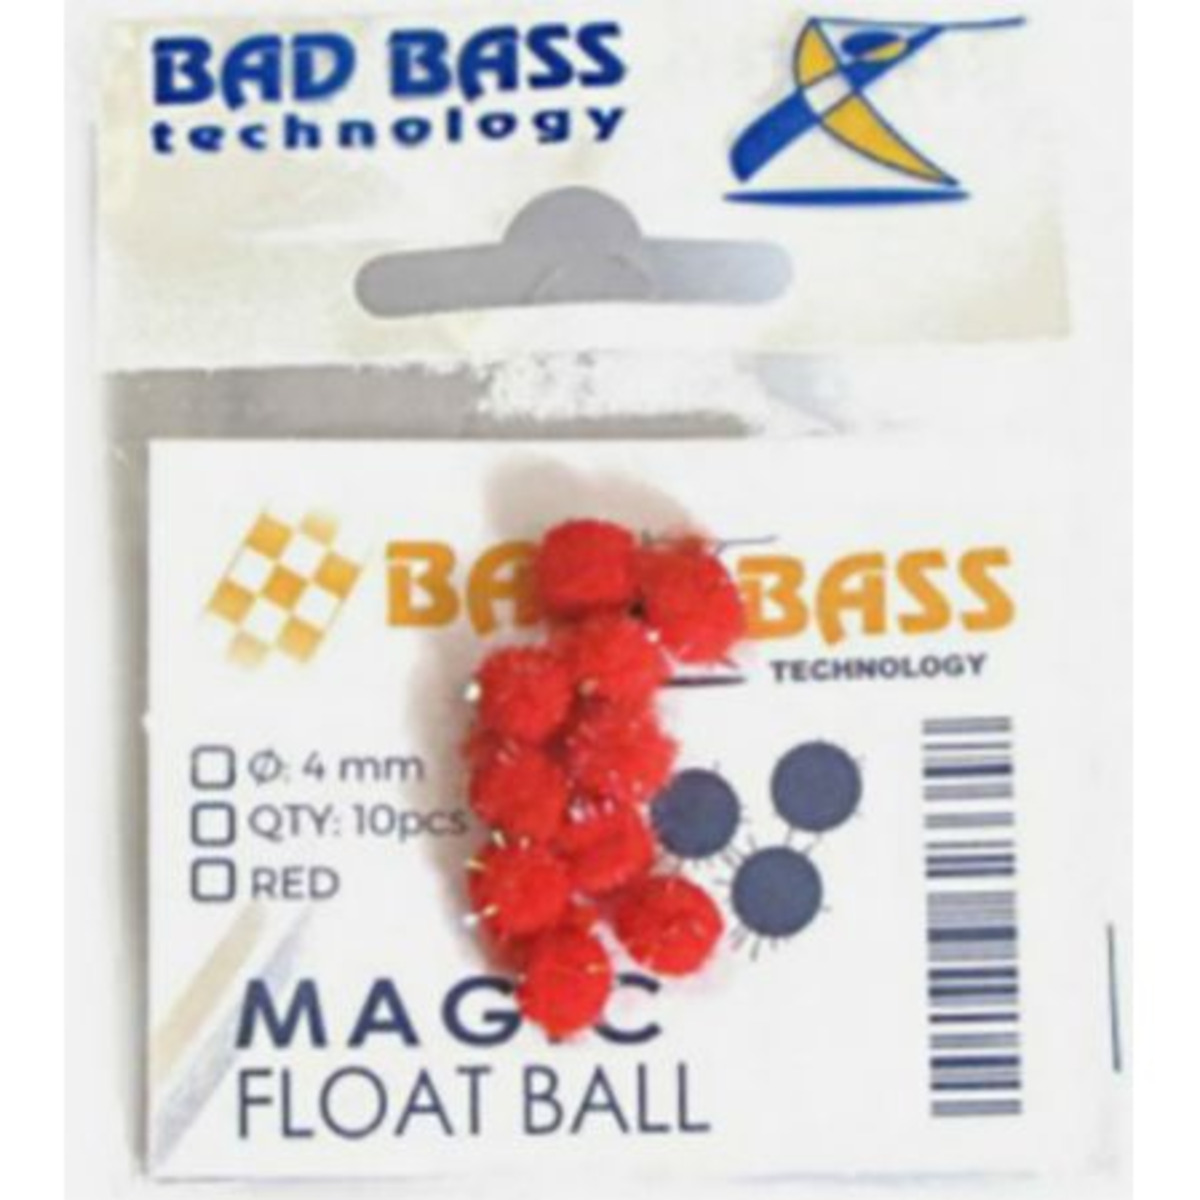 Bad Bass Magic Float Ball - 4 mm - Red